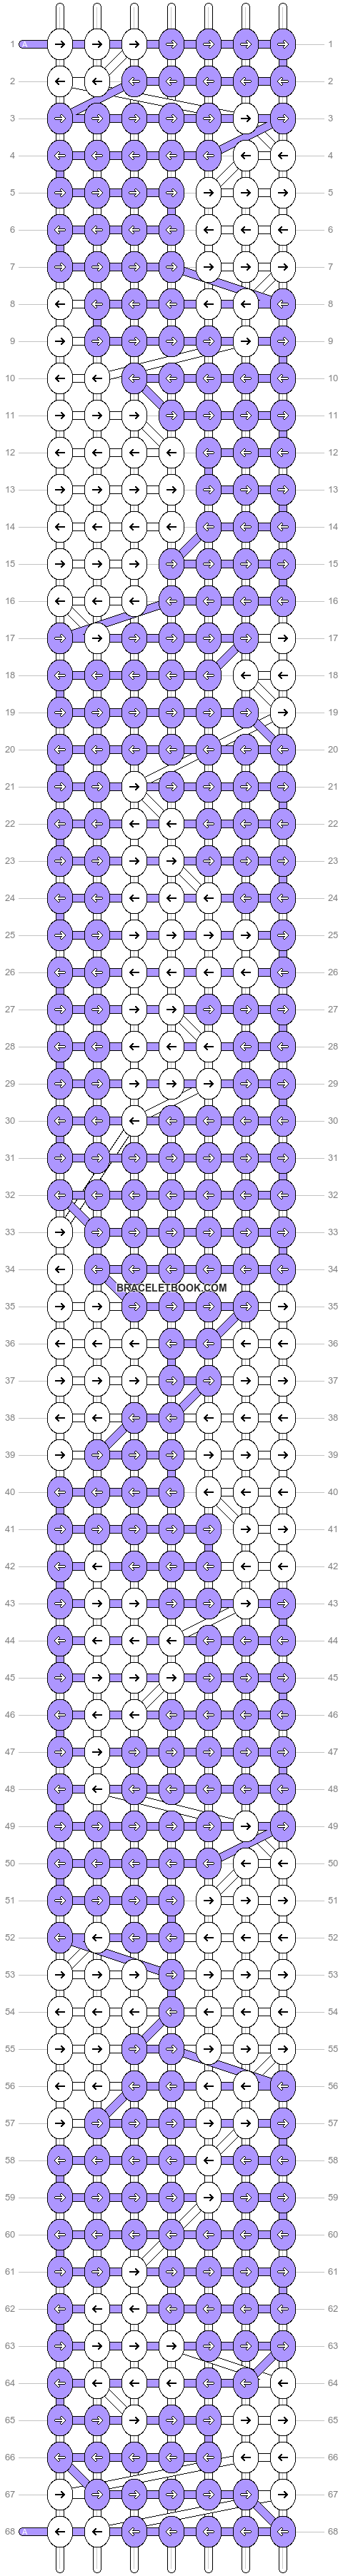 Alpha pattern #1654 variation #41449 pattern